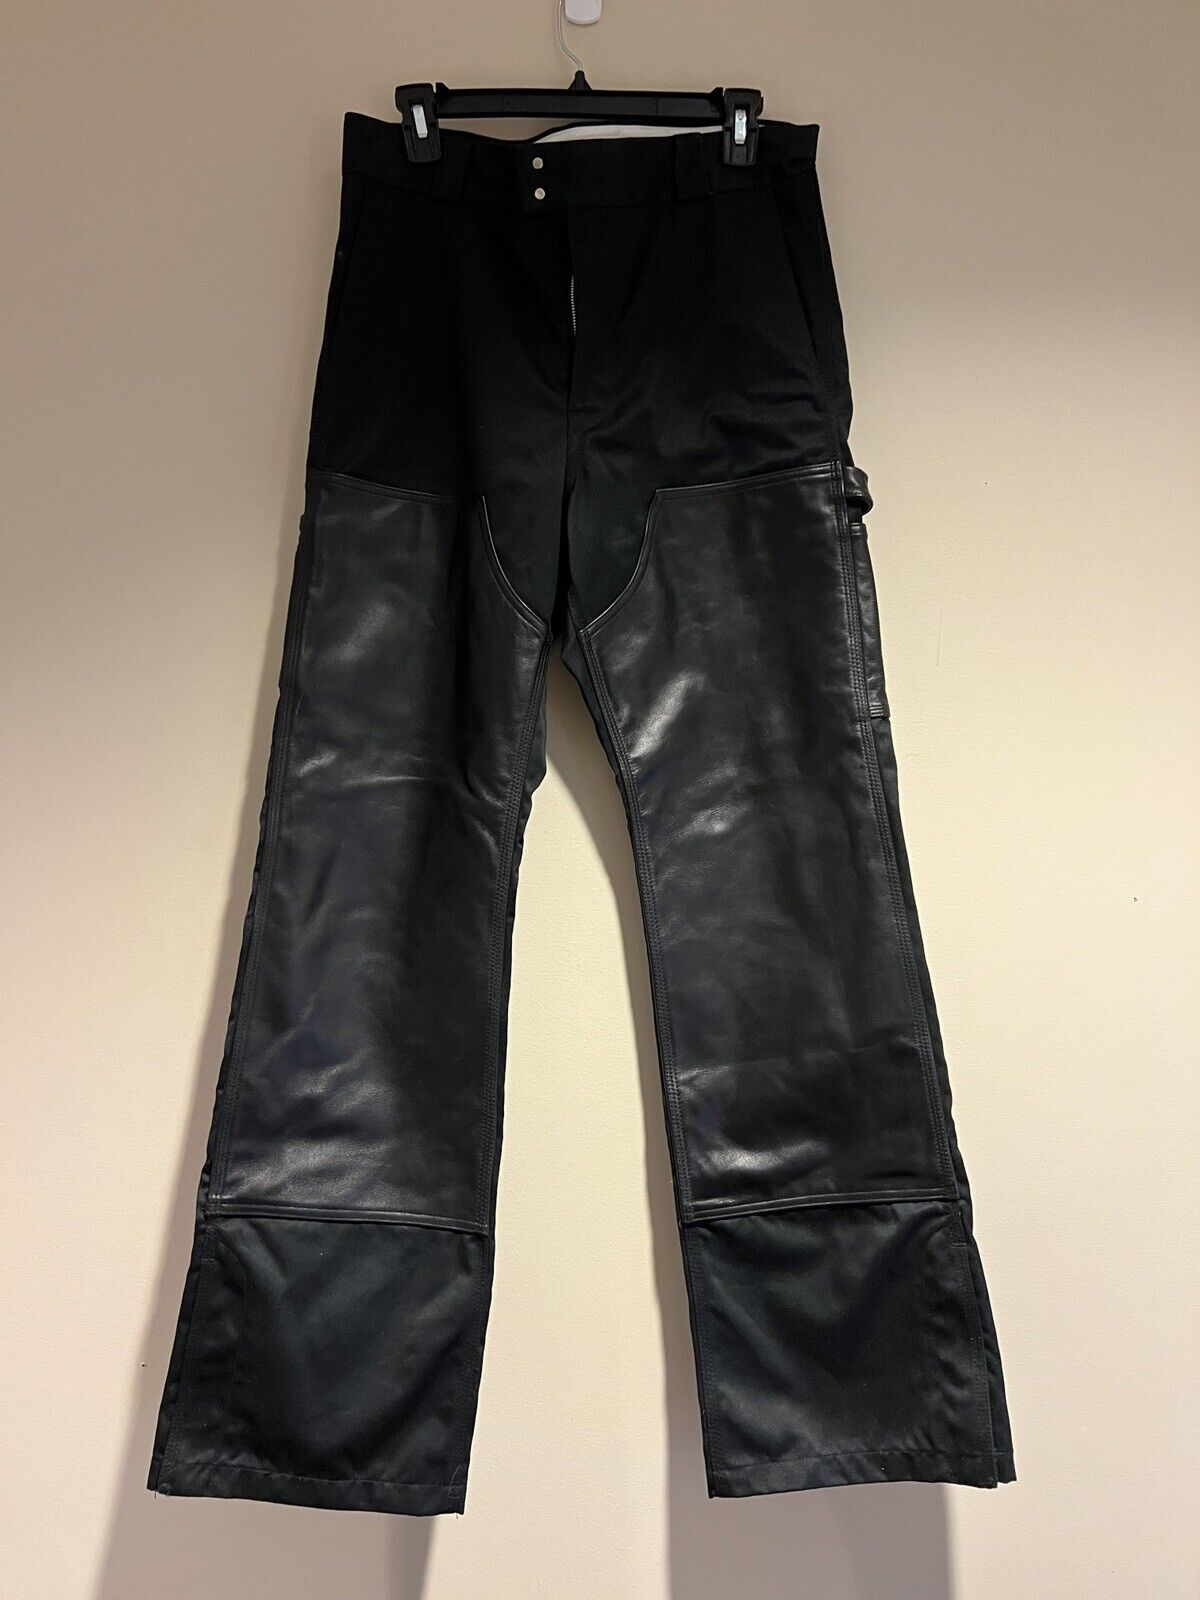 Vuja De Adagio Leather Double Knee Pants Size 2 | eBay